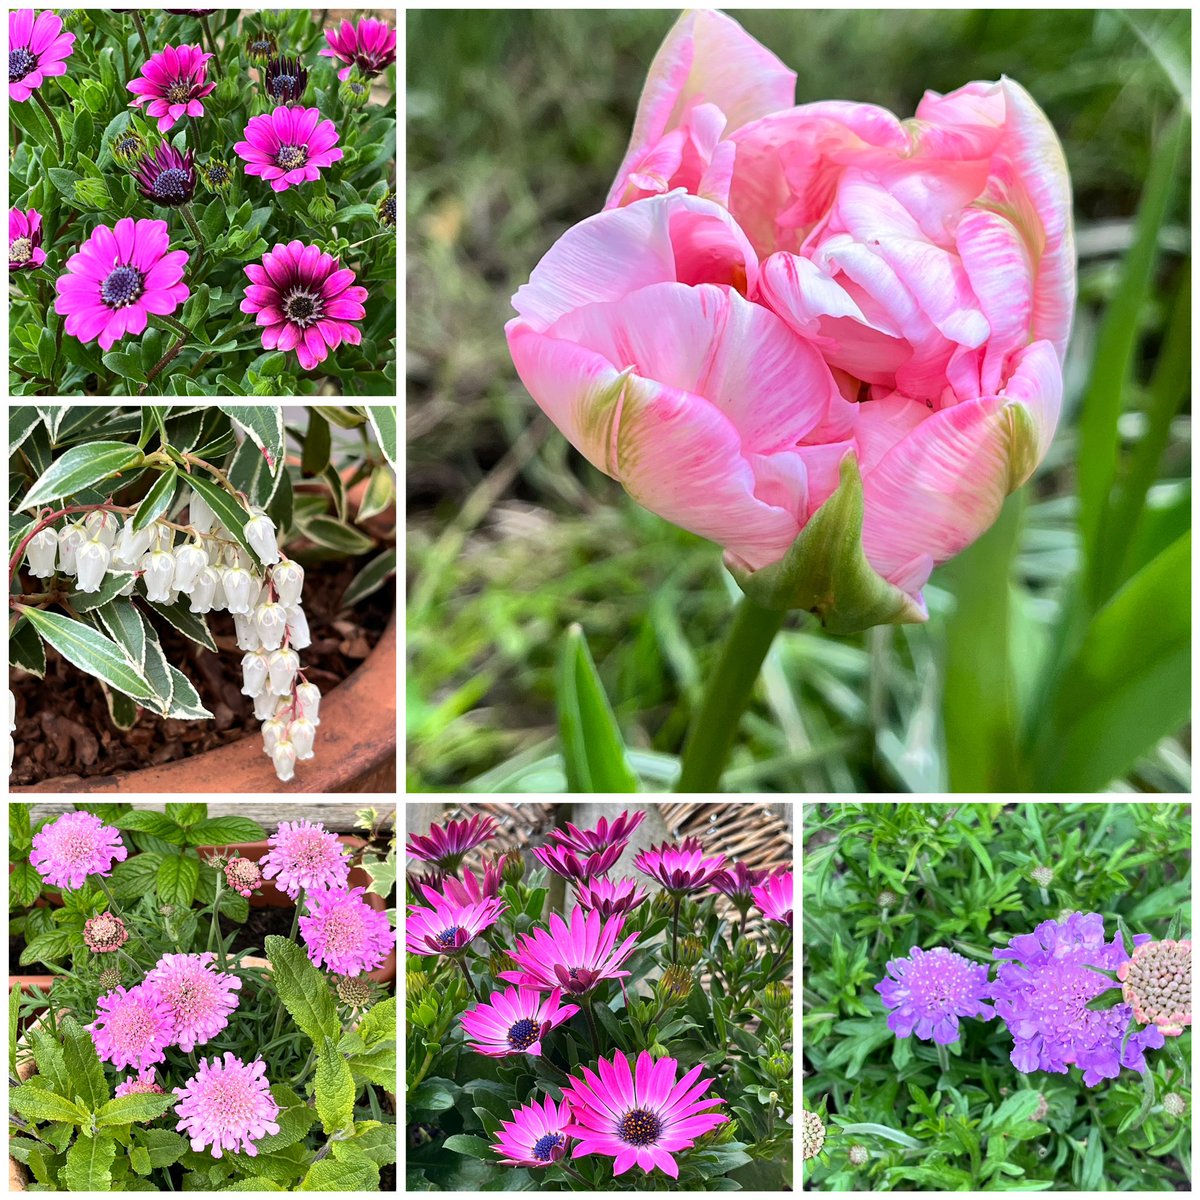 Good morning. Happy Friday everyone. #MyGarden #gardening #FlowersonFriday